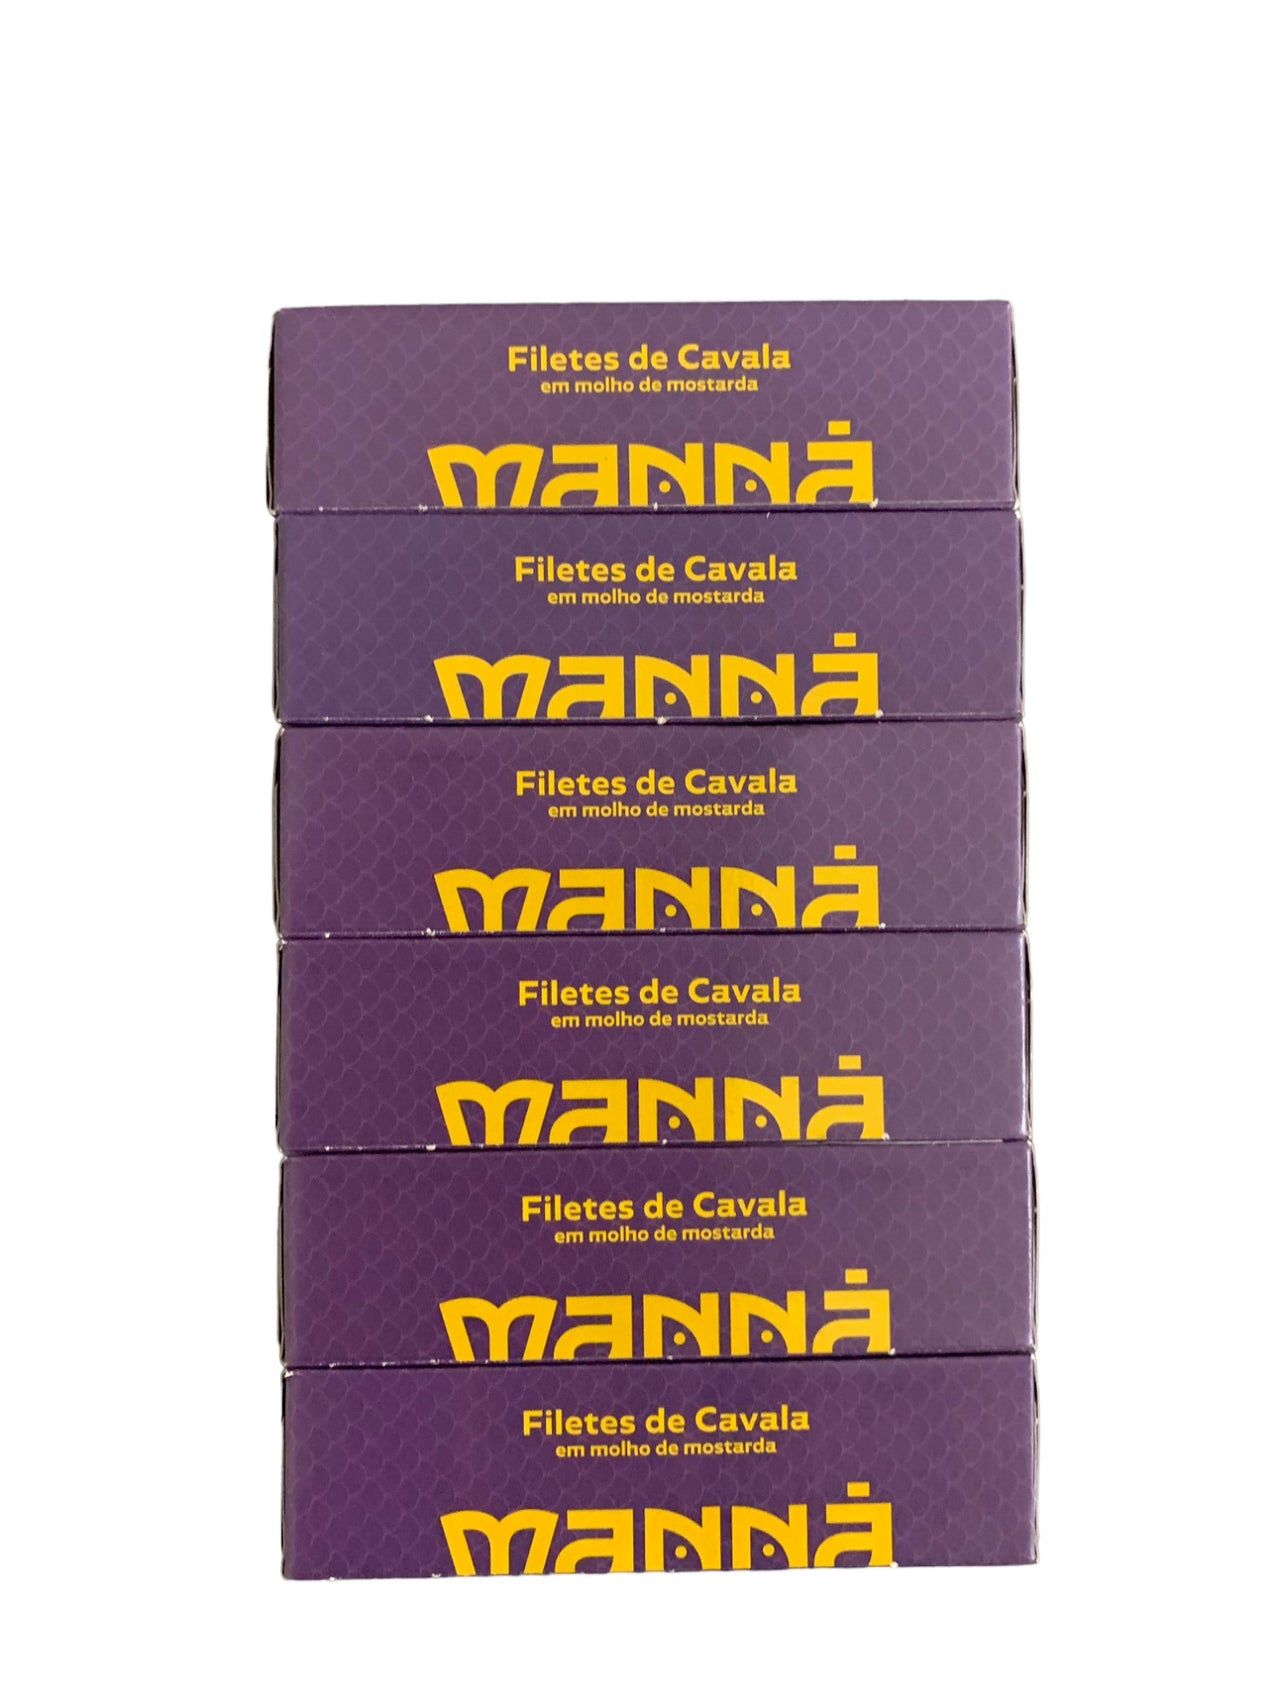 Manná Mackerel Fillets in Mustard Sauce - 6 Pack - TinCanFish